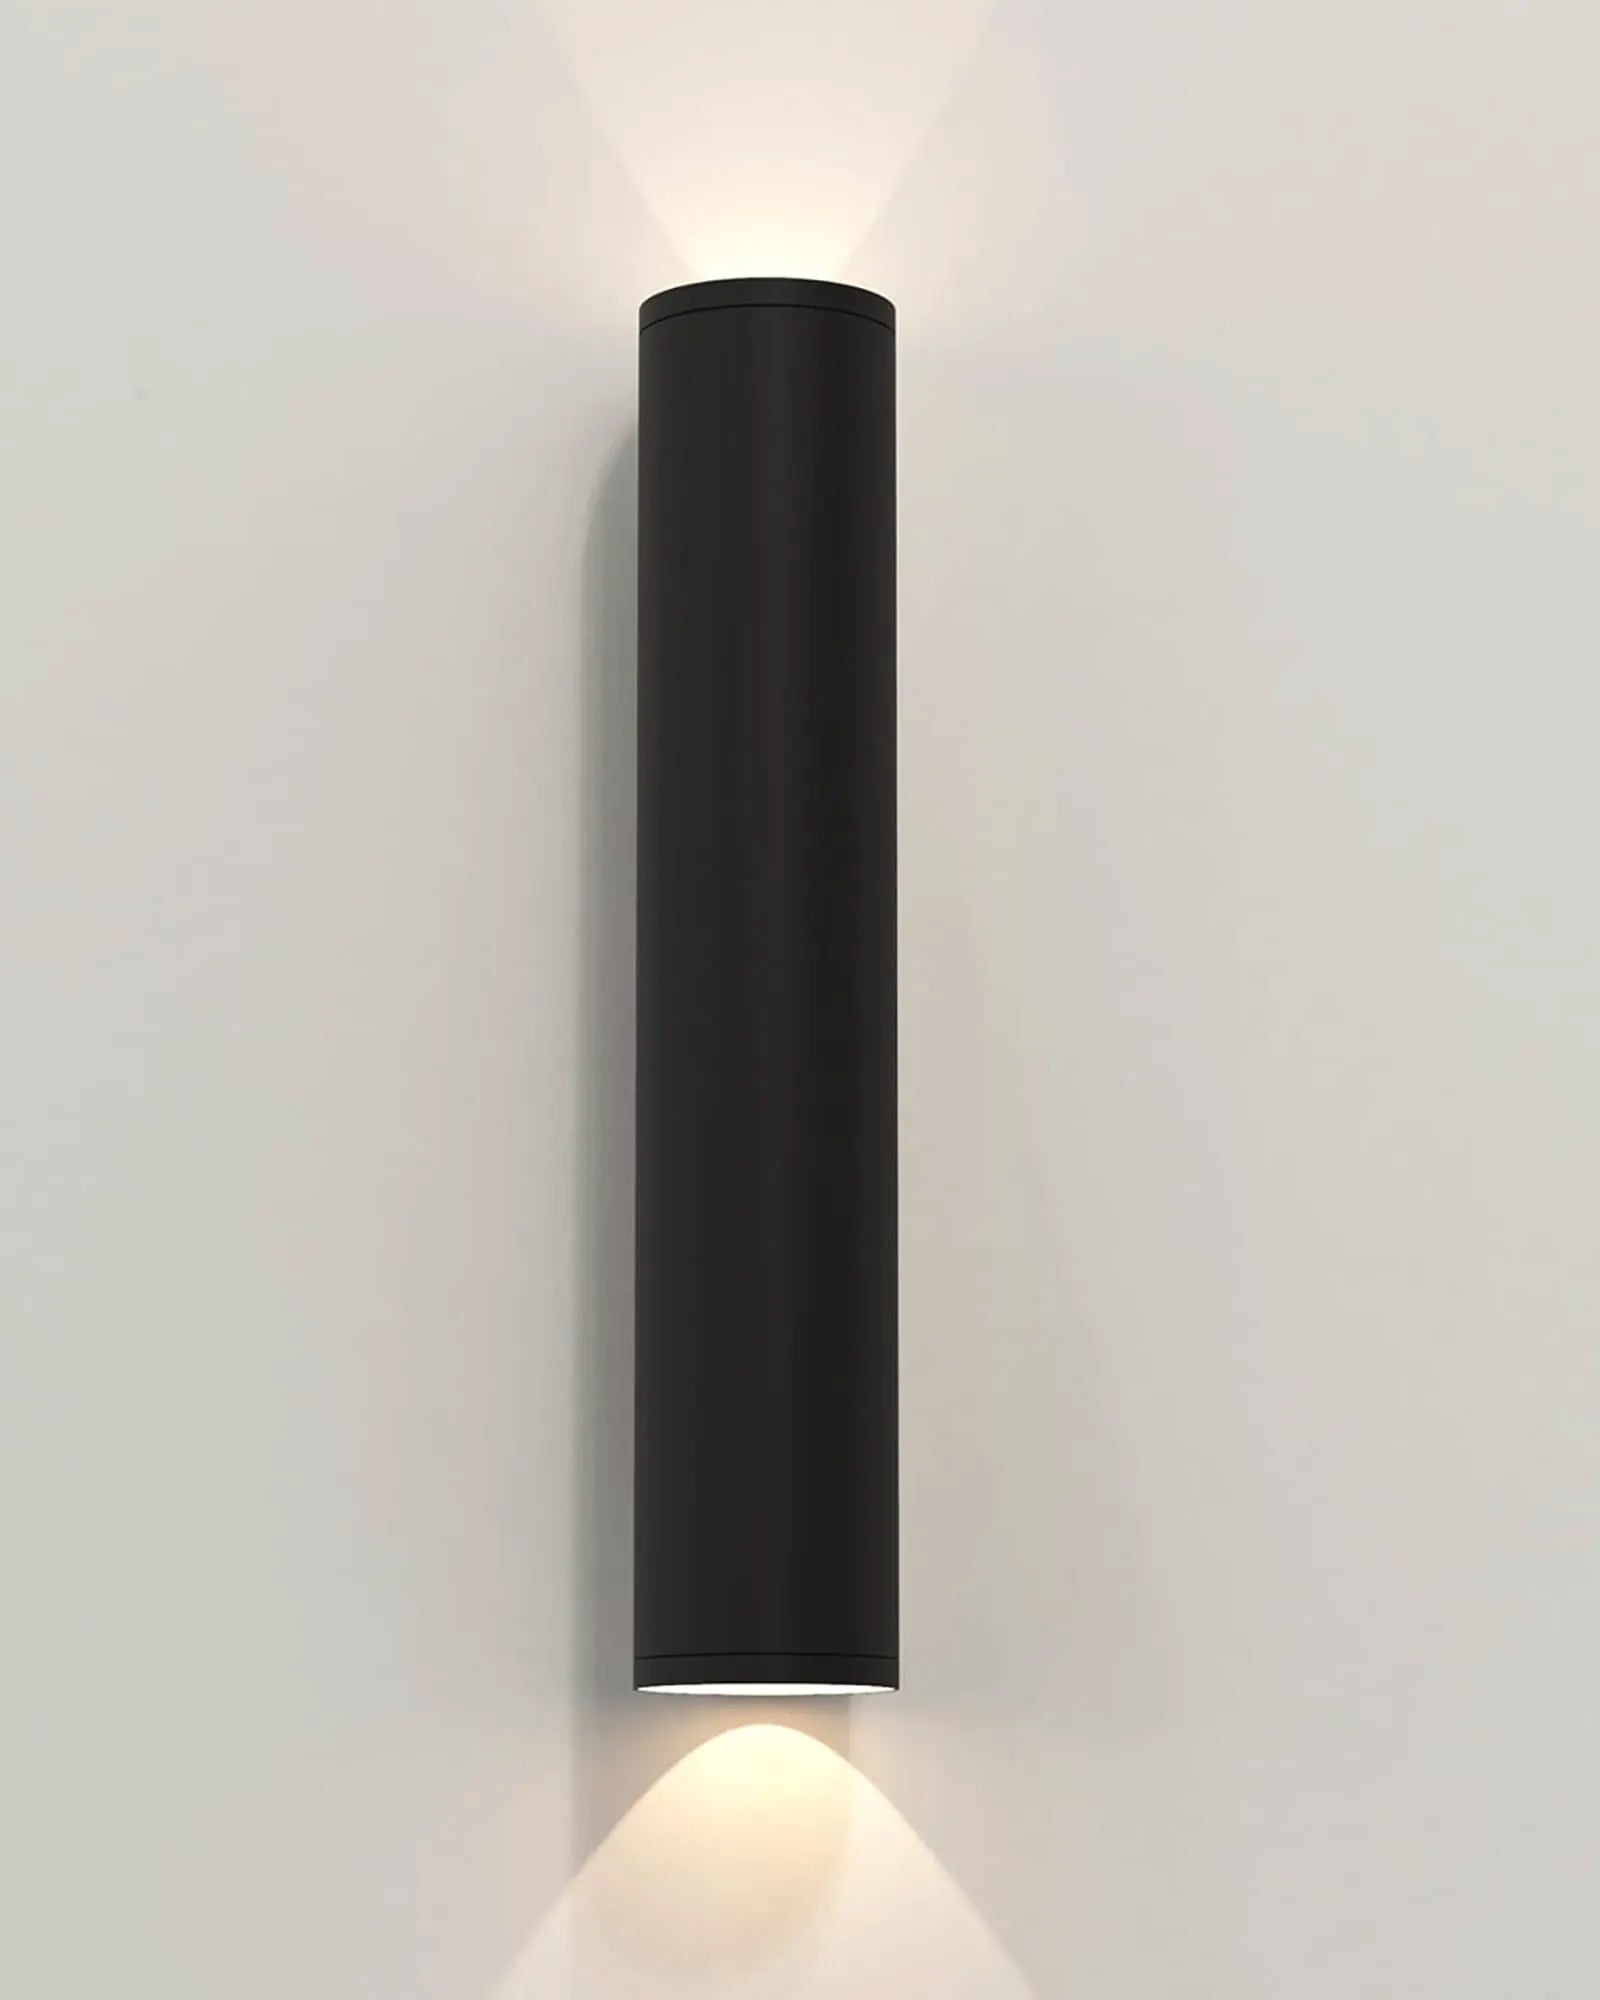 Aba minimalistic cylinder outdoor wall light black large